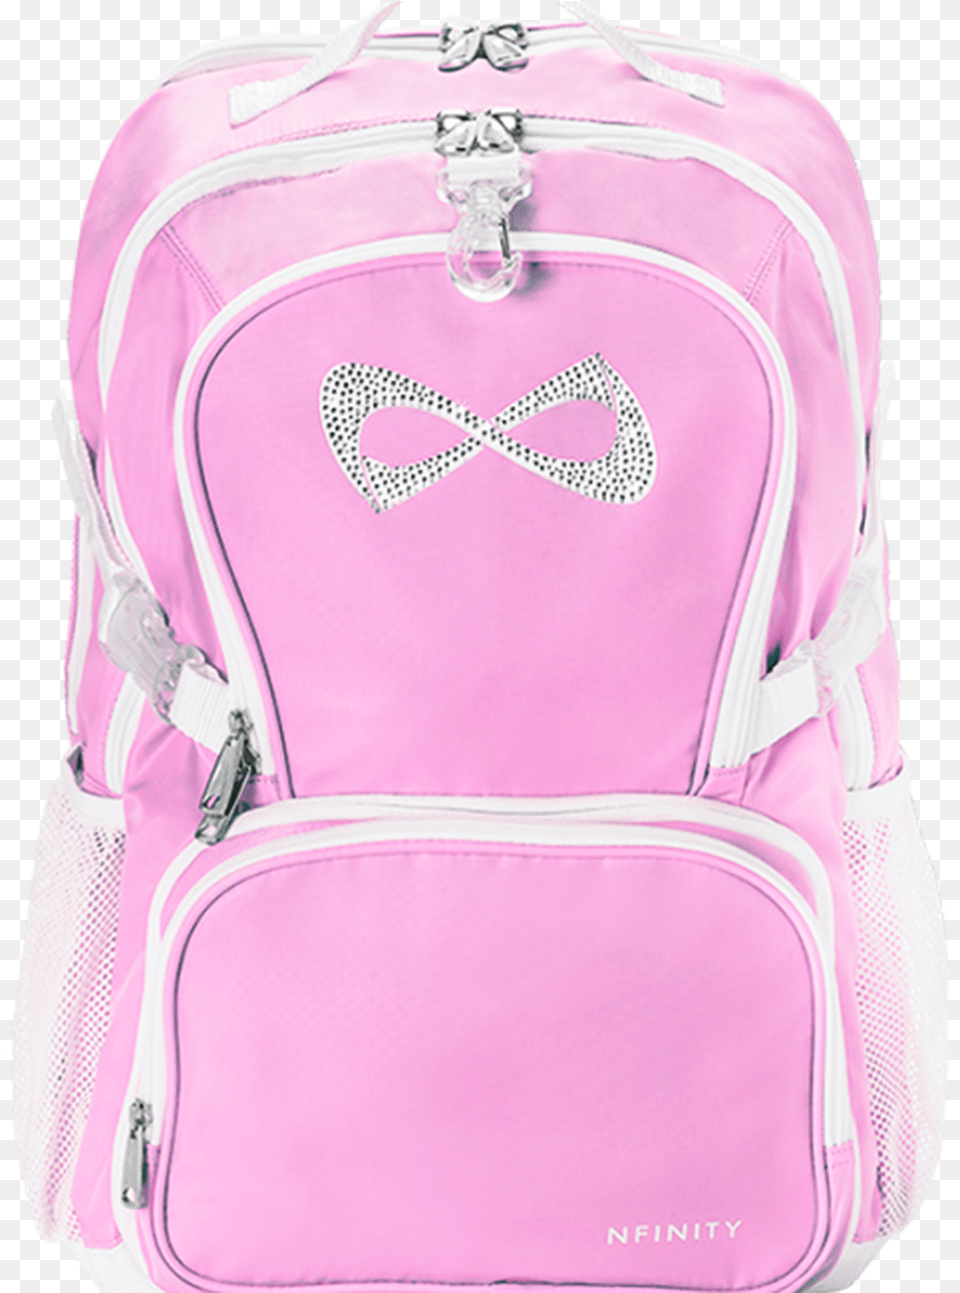 Pink Princess Nfinity Backpack, Bag Free Png Download